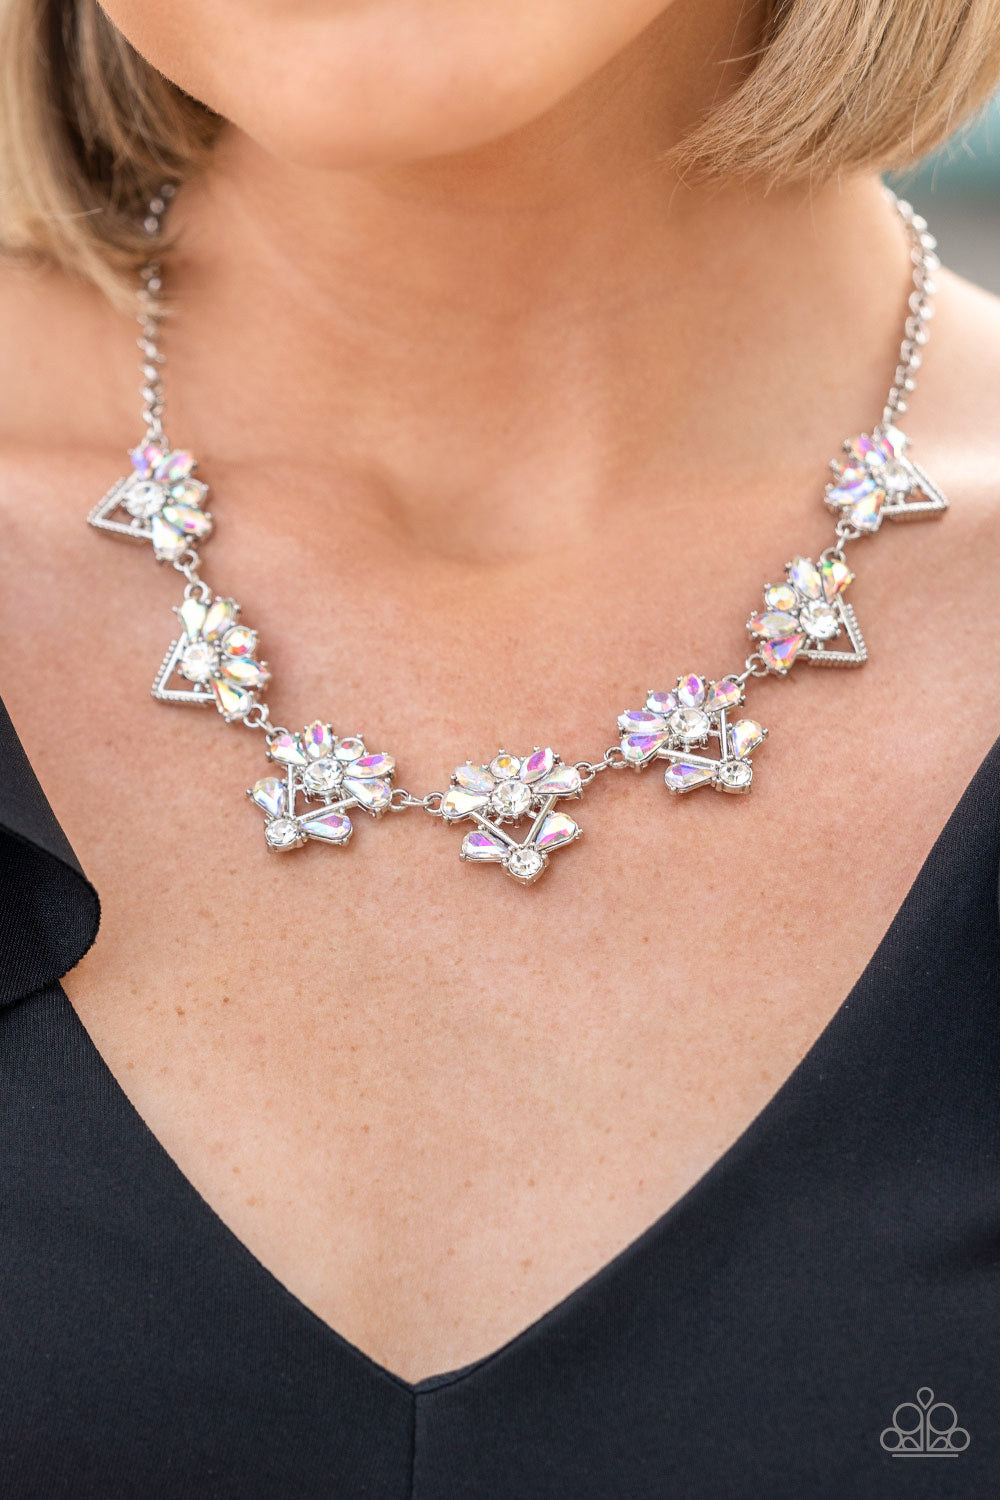 Extragalactic Extravagance - Multi Necklace Set 🎉 Spring 2022 Exclusive - Princess Glam Shop